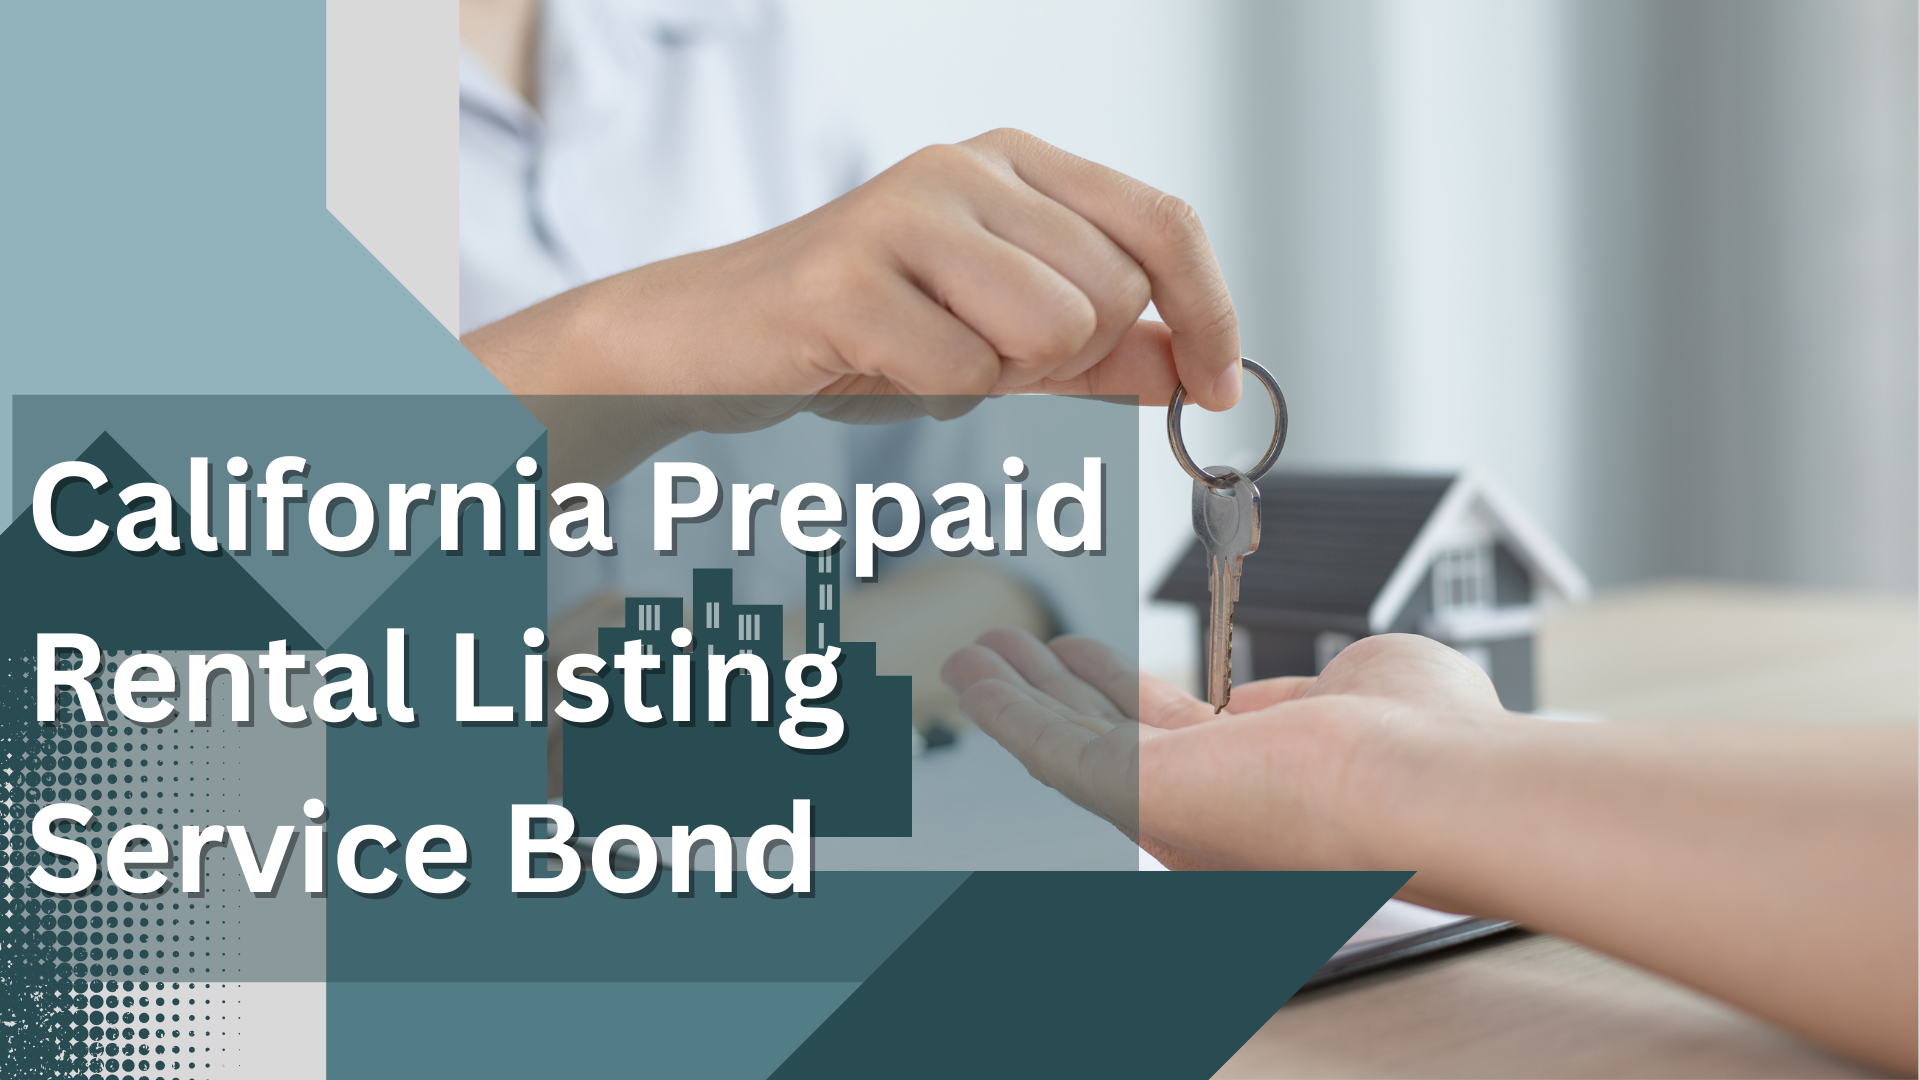 Surety Bond-California Prepaid Rental Listing Service Bond